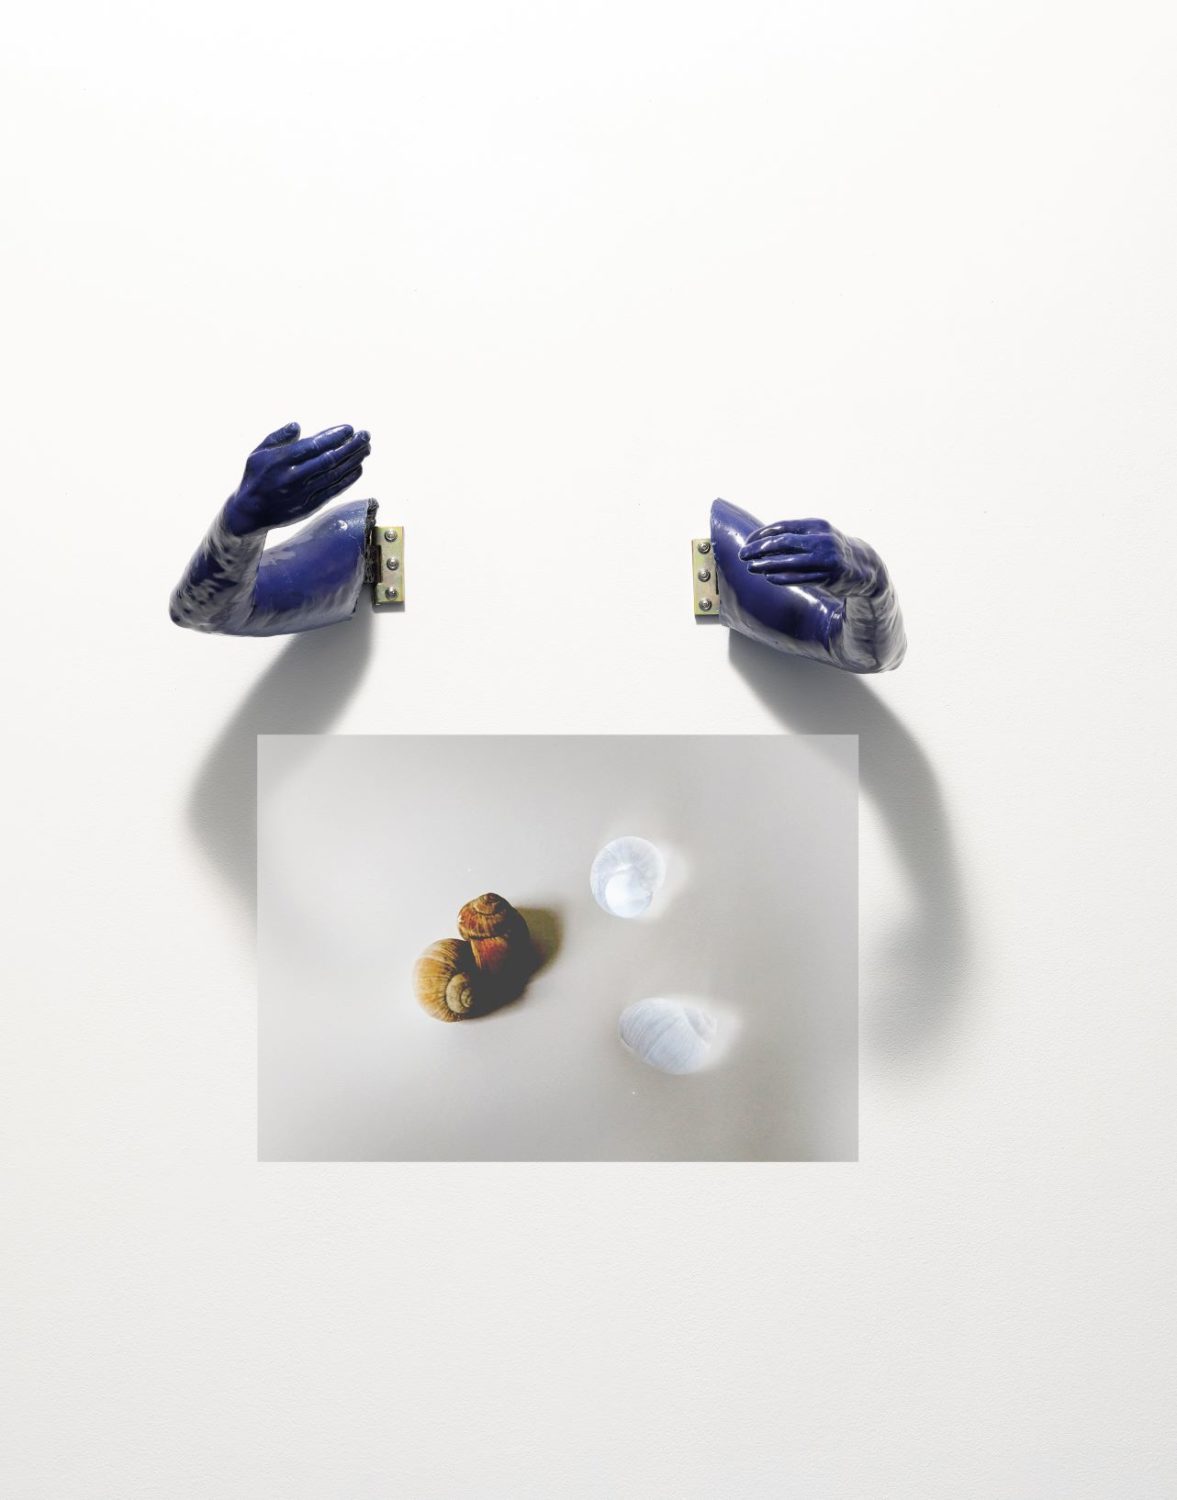 "fragile - handle with care", Alissa Mirea Weidenfeld, 2022, video installation, ca. 12'